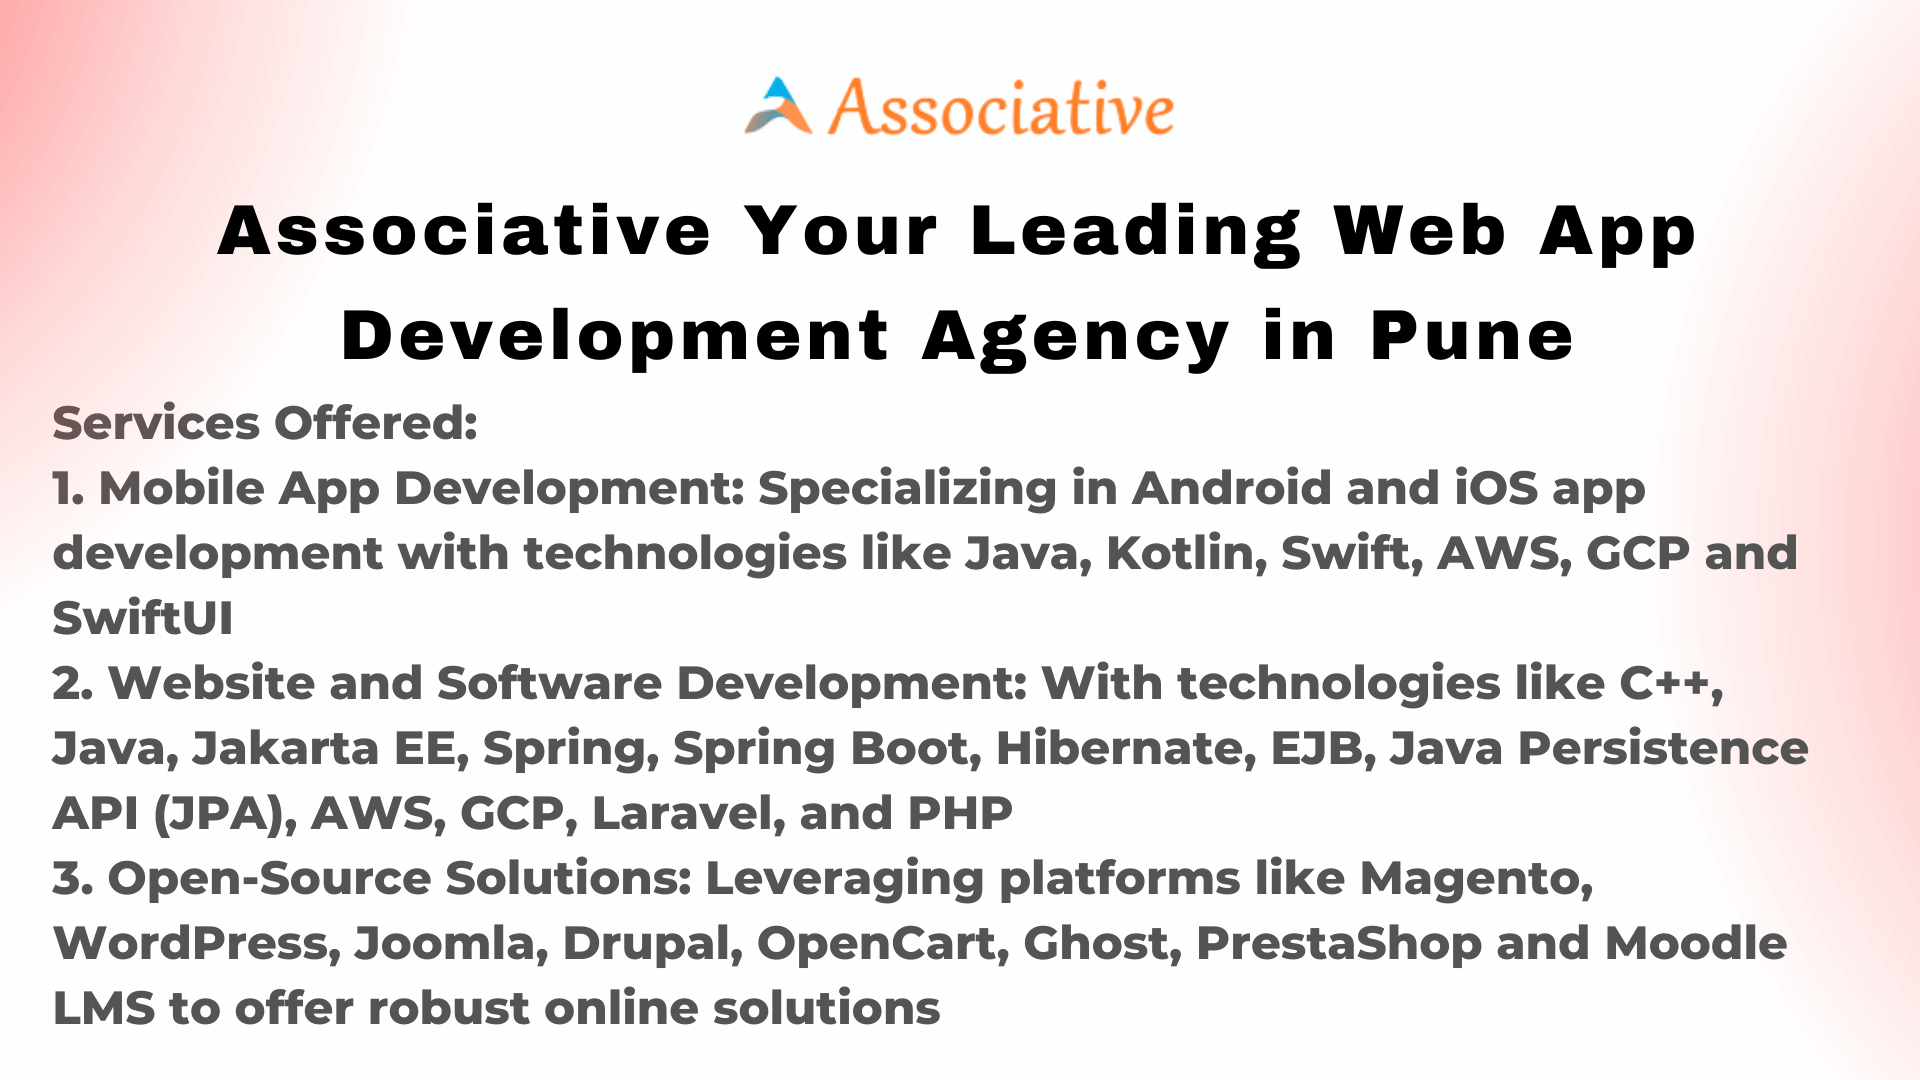 Associative Your Leading Web App Development Agency in Pune